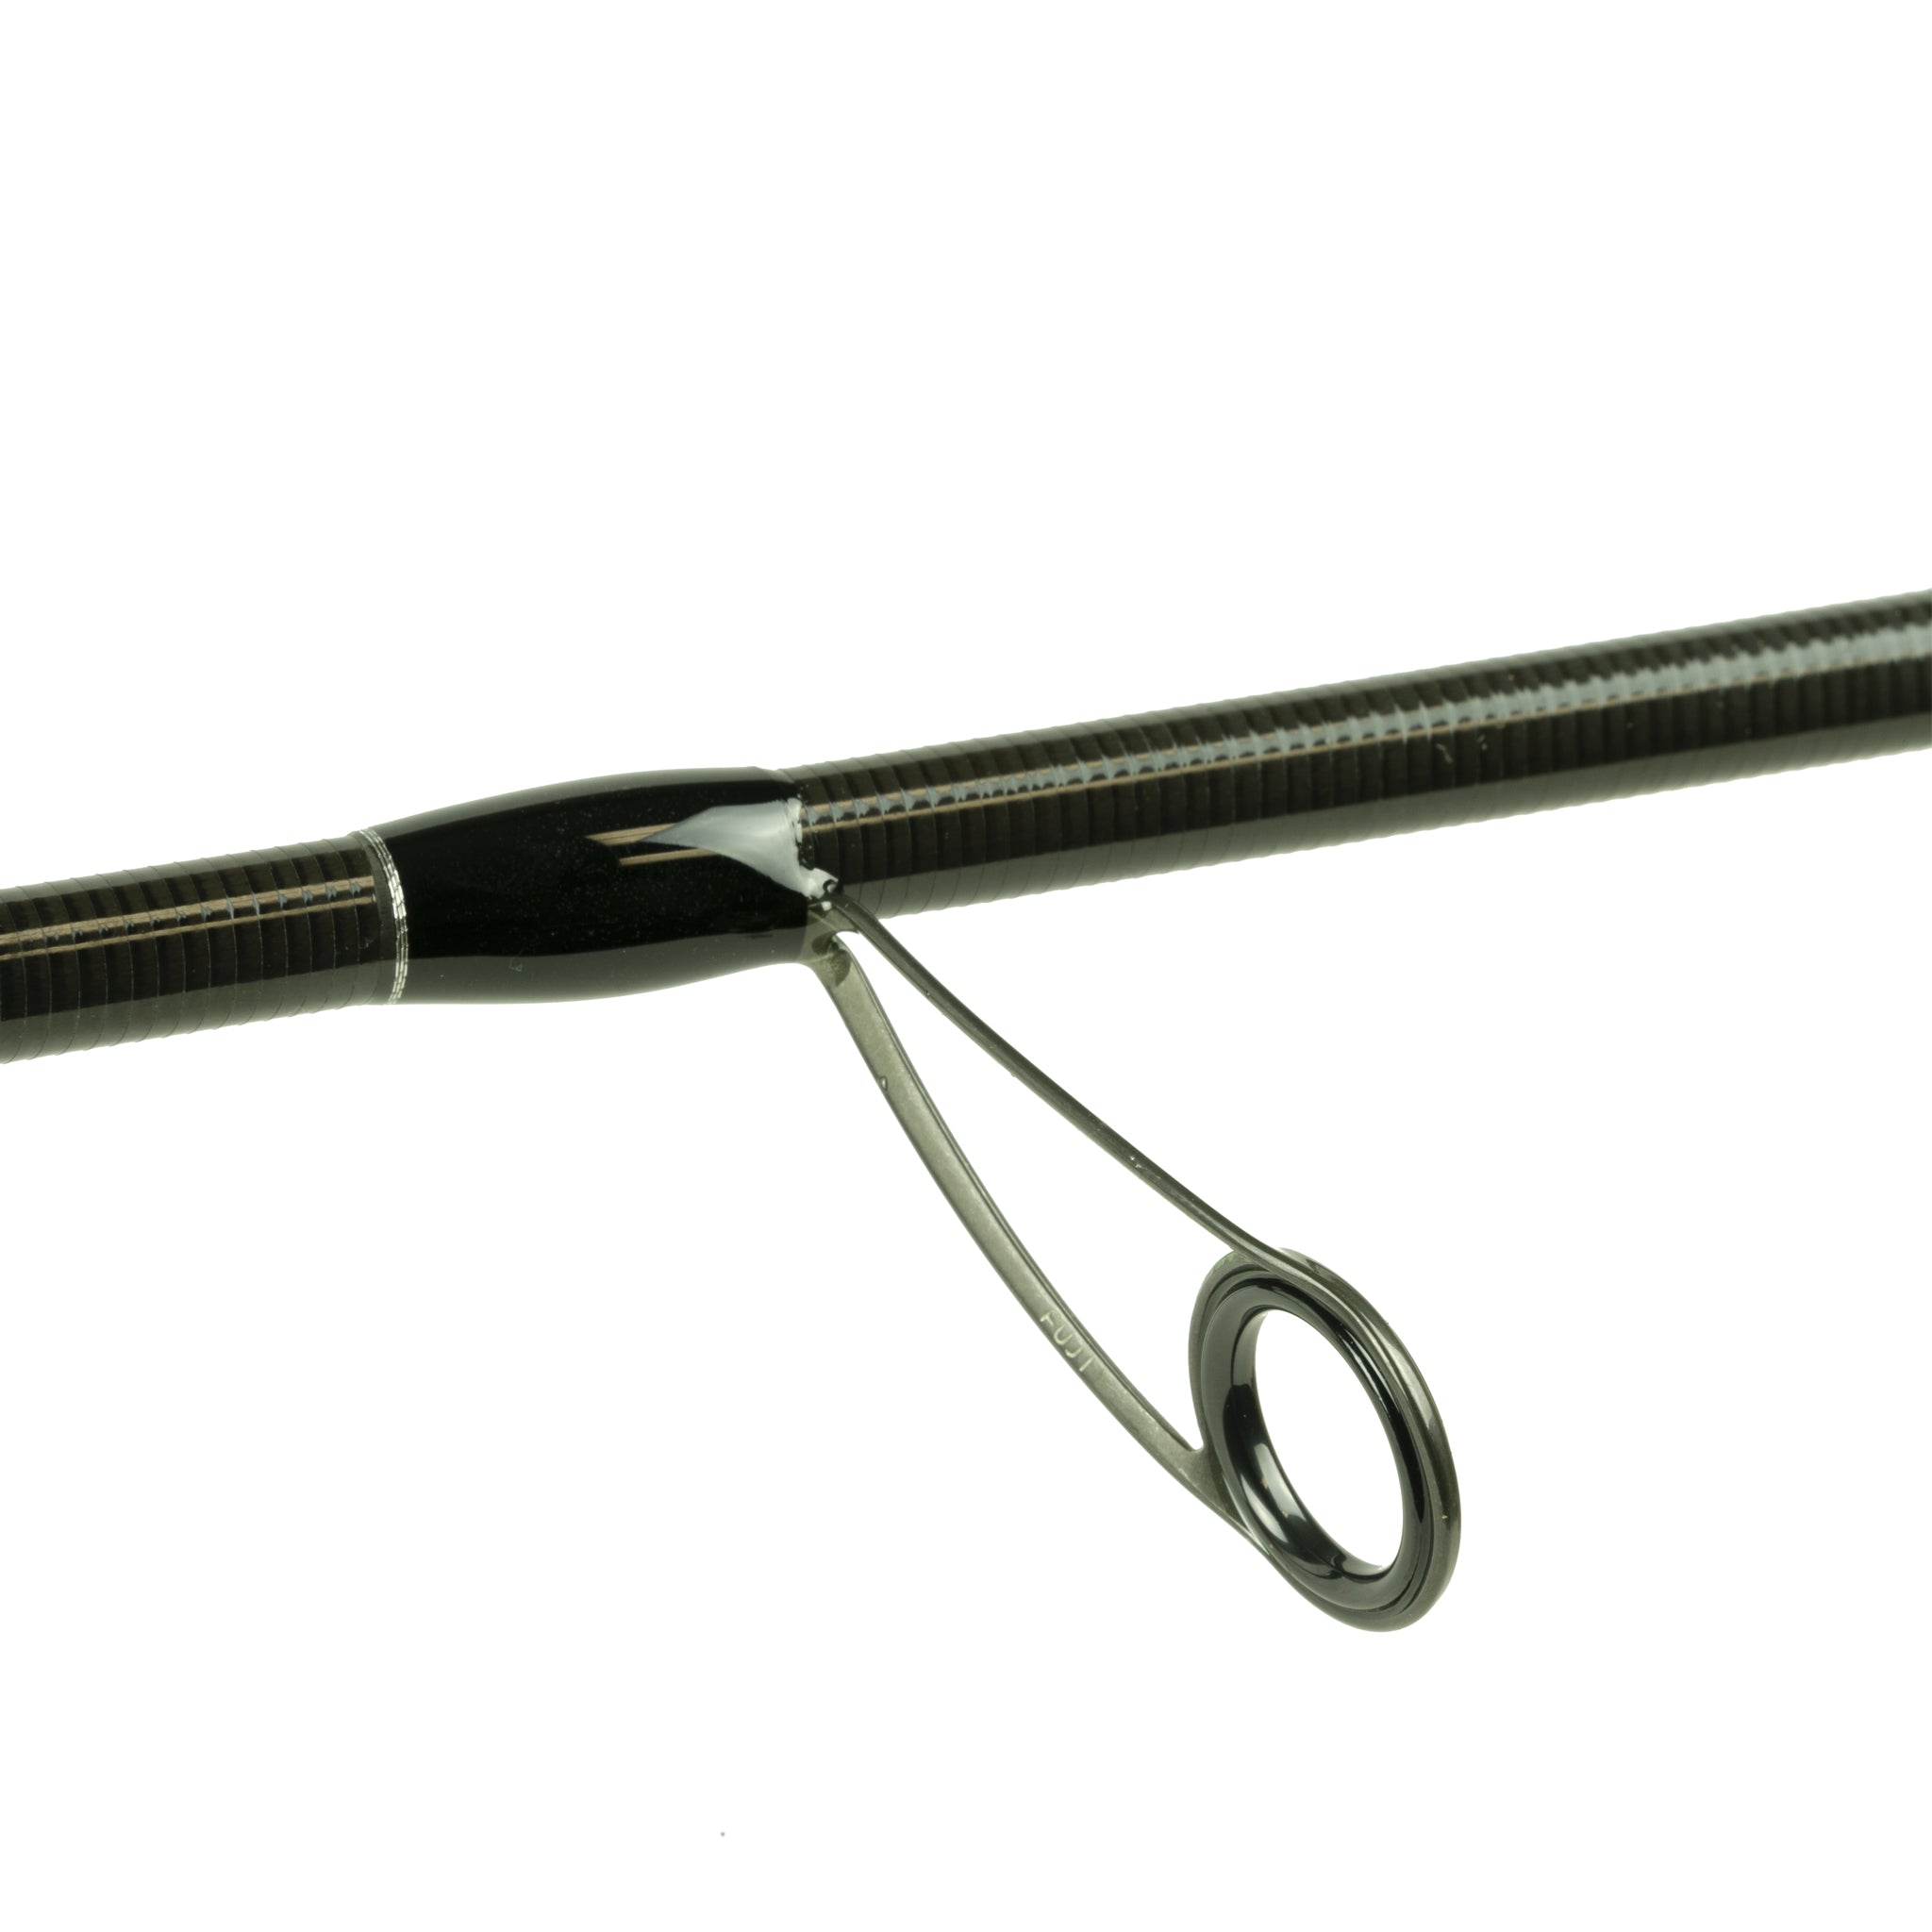 6th Sense Fishing - Casting Rods - Unicorn 7'2 Medium-Light, Fast